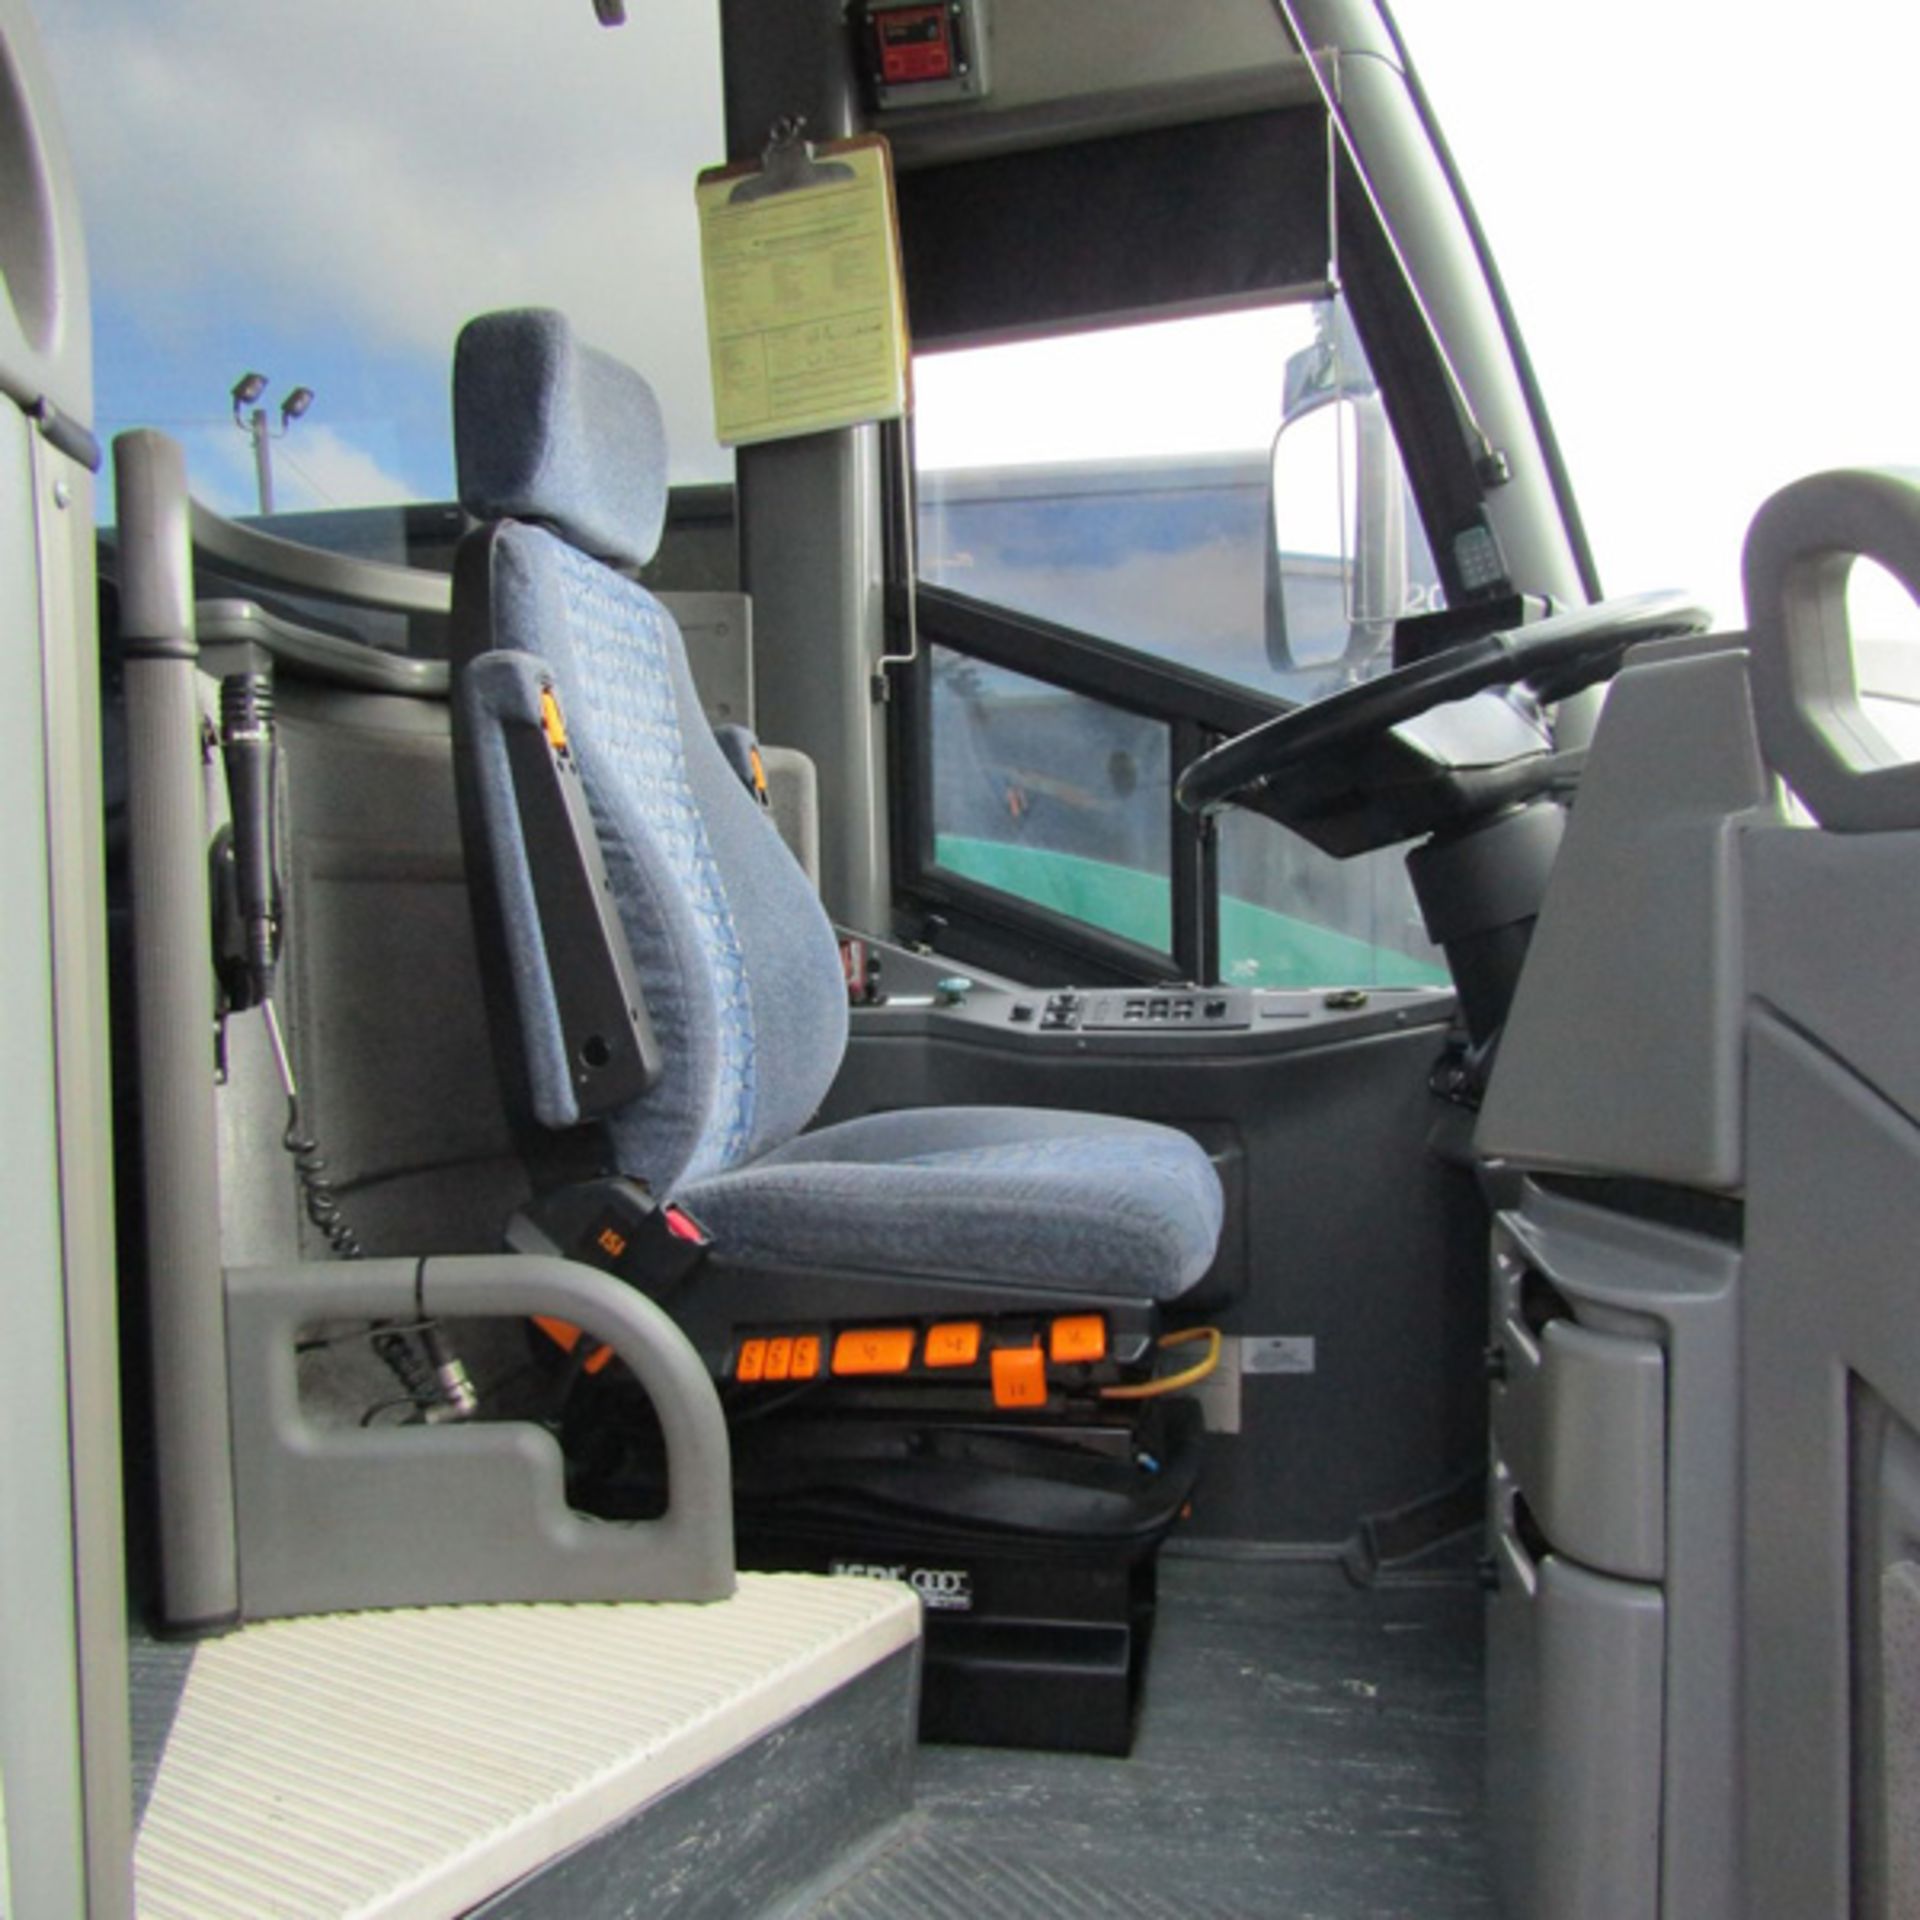 2011 MCI J4500 56-Passenger Charter Bus - Dual Axle, VIN 2MG3JMEA0BW65647, 474,631 Miles (Bus - Bild 5 aus 8